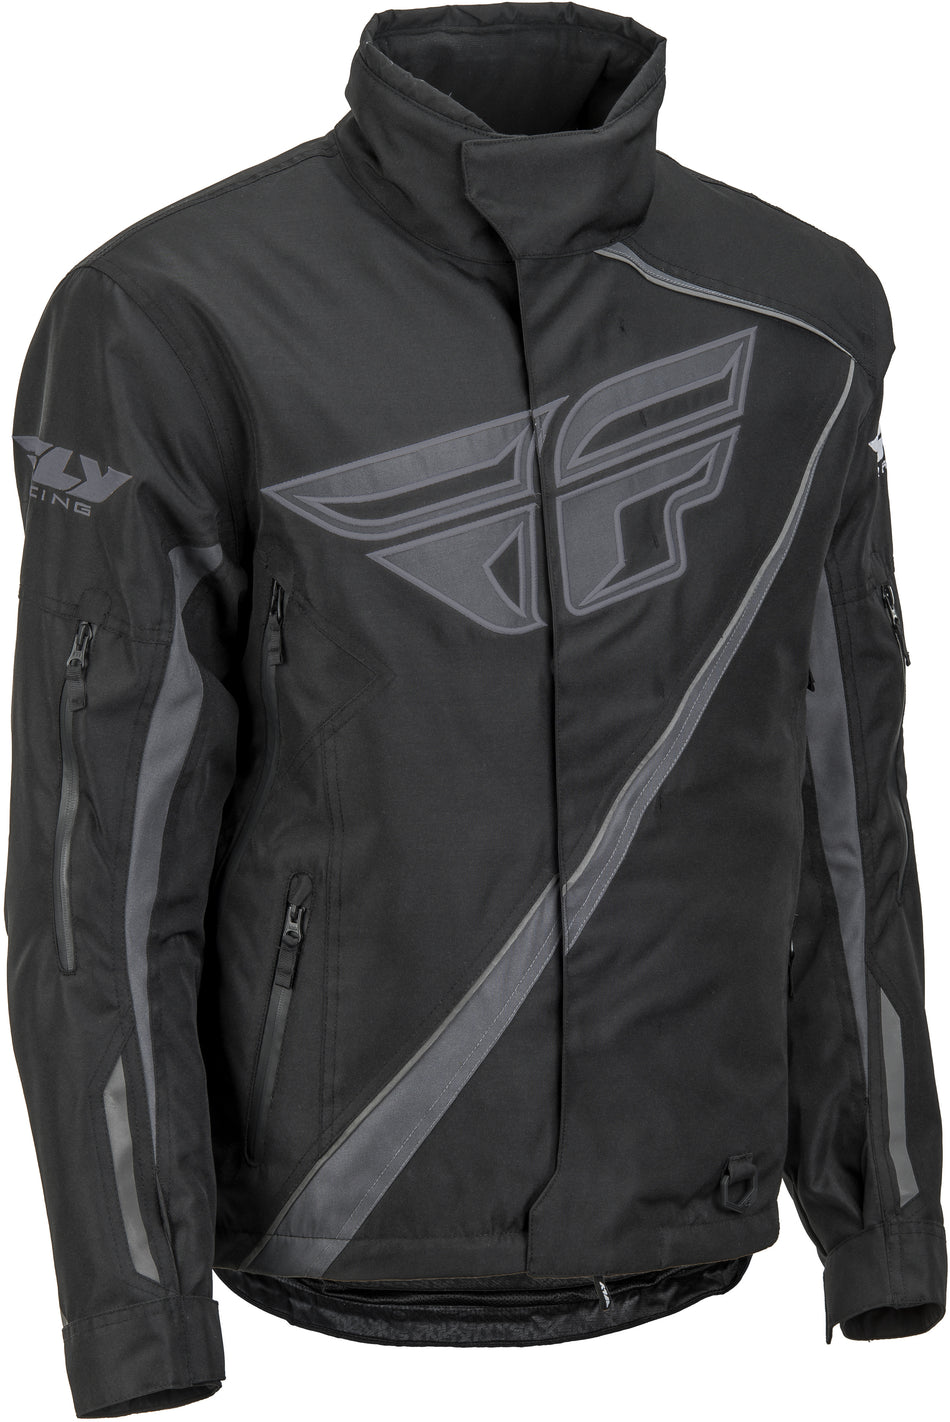 FLY RACING Snx Pro Jacket Black 2x 470-40802X